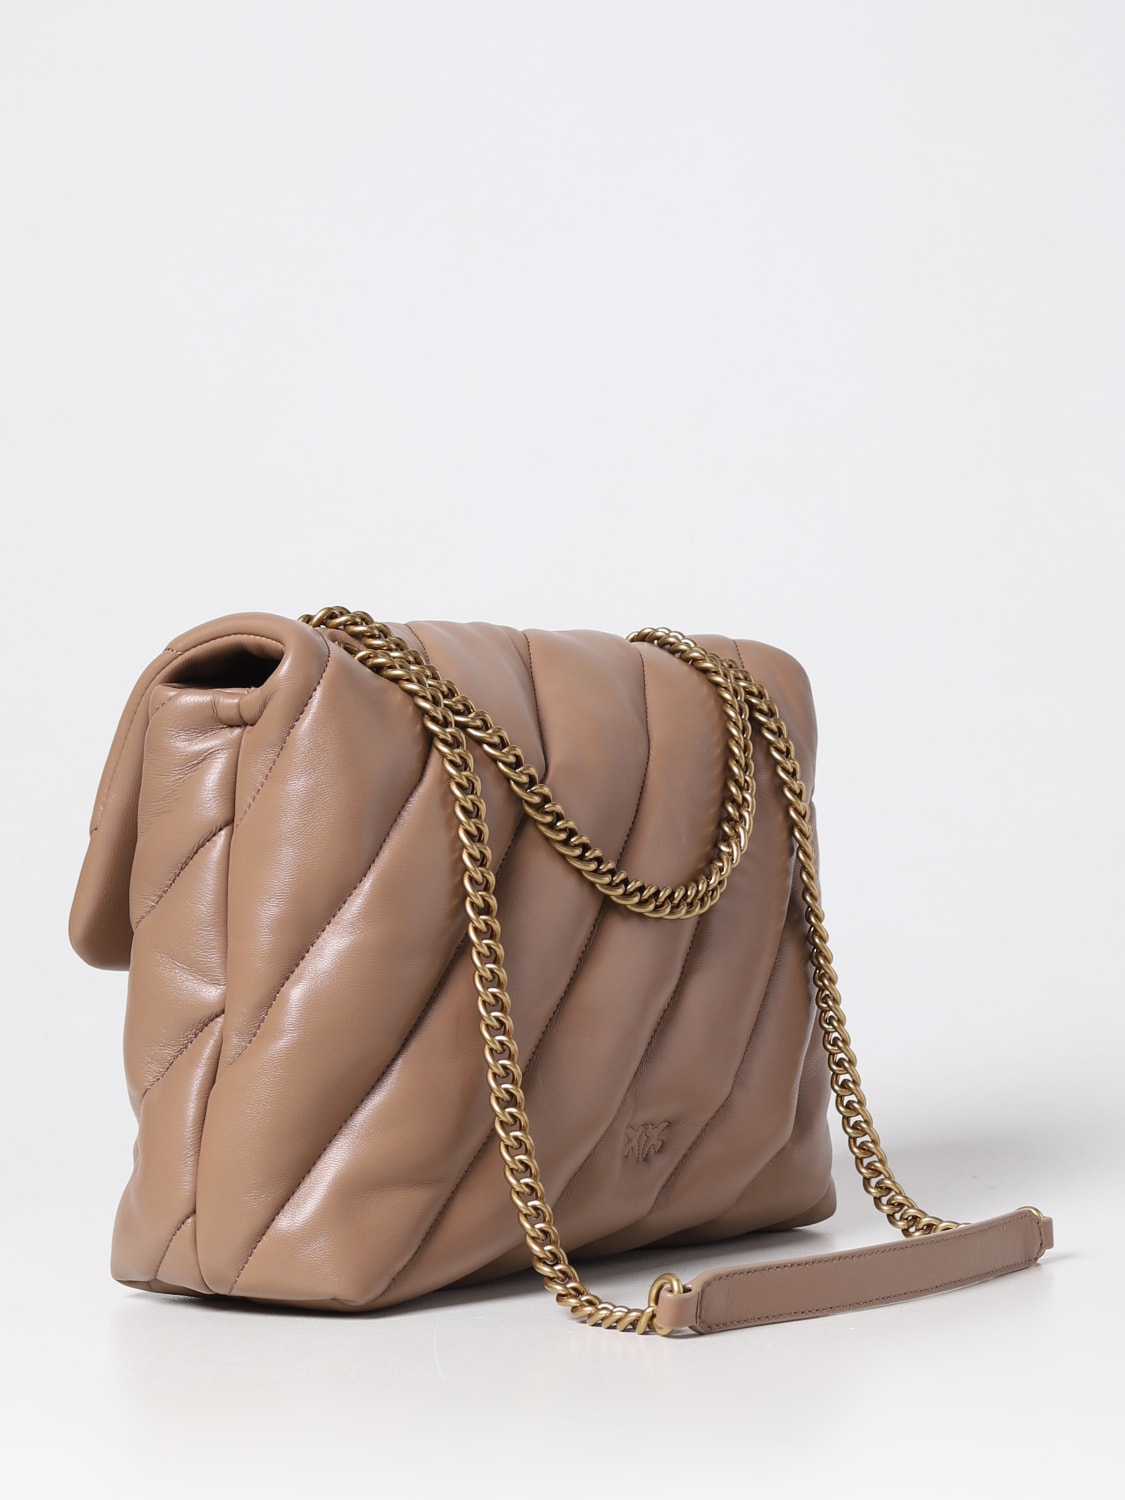 Chanel 19 leather handbag Chanel Black in Leather - 28967778